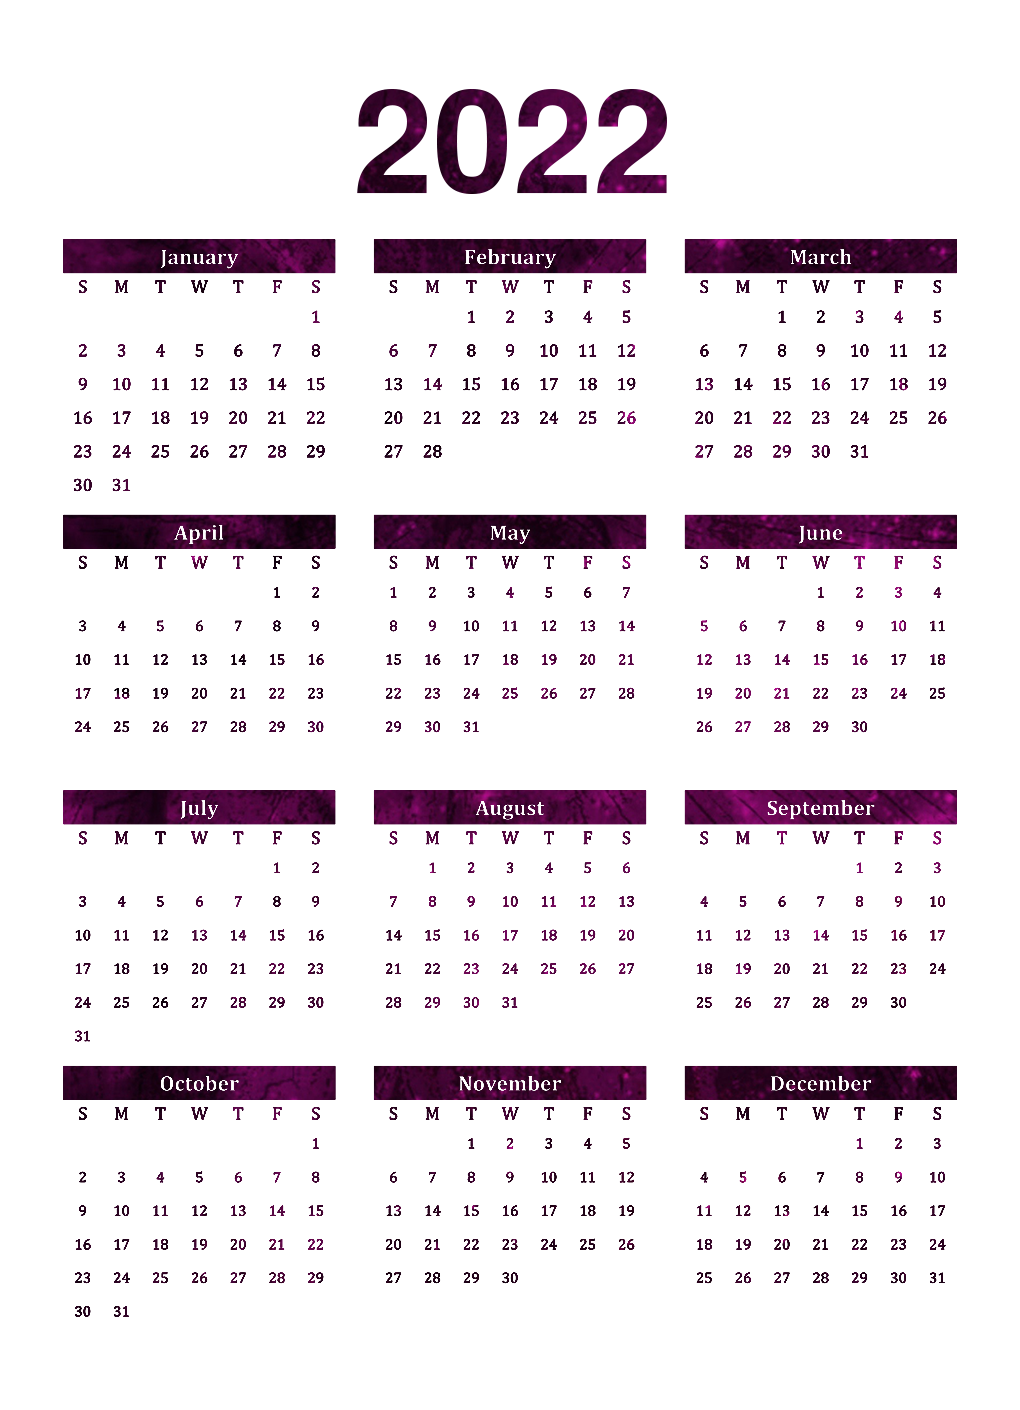 2022 Calendar PNG Image Transparent Backgrounds